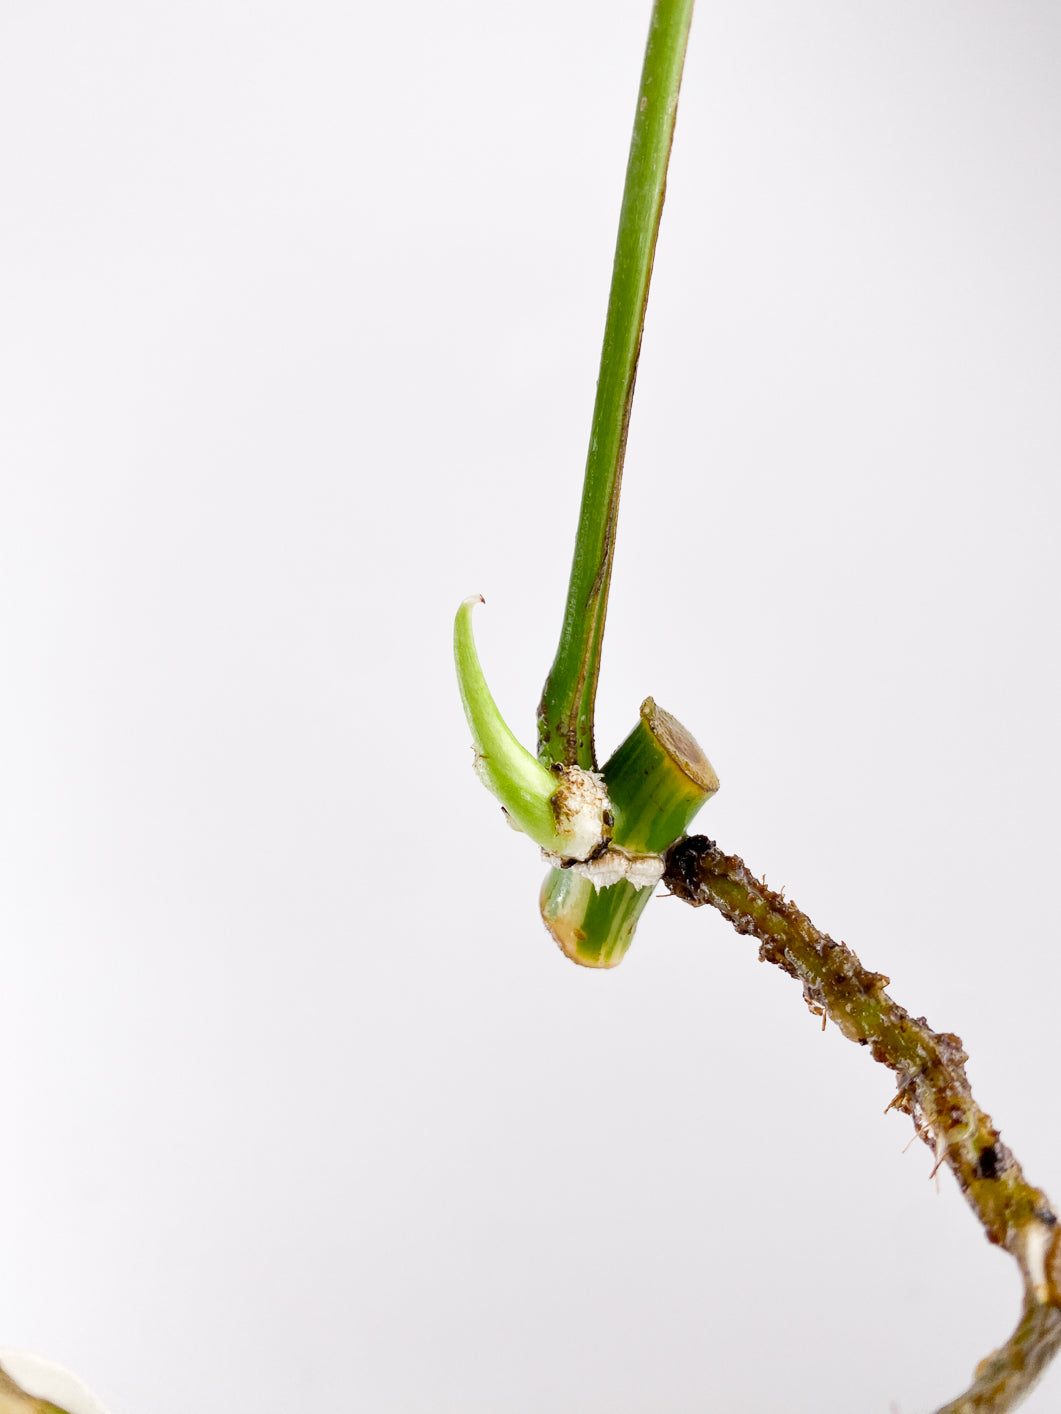 Rhaphidophora tetrasperma variegated